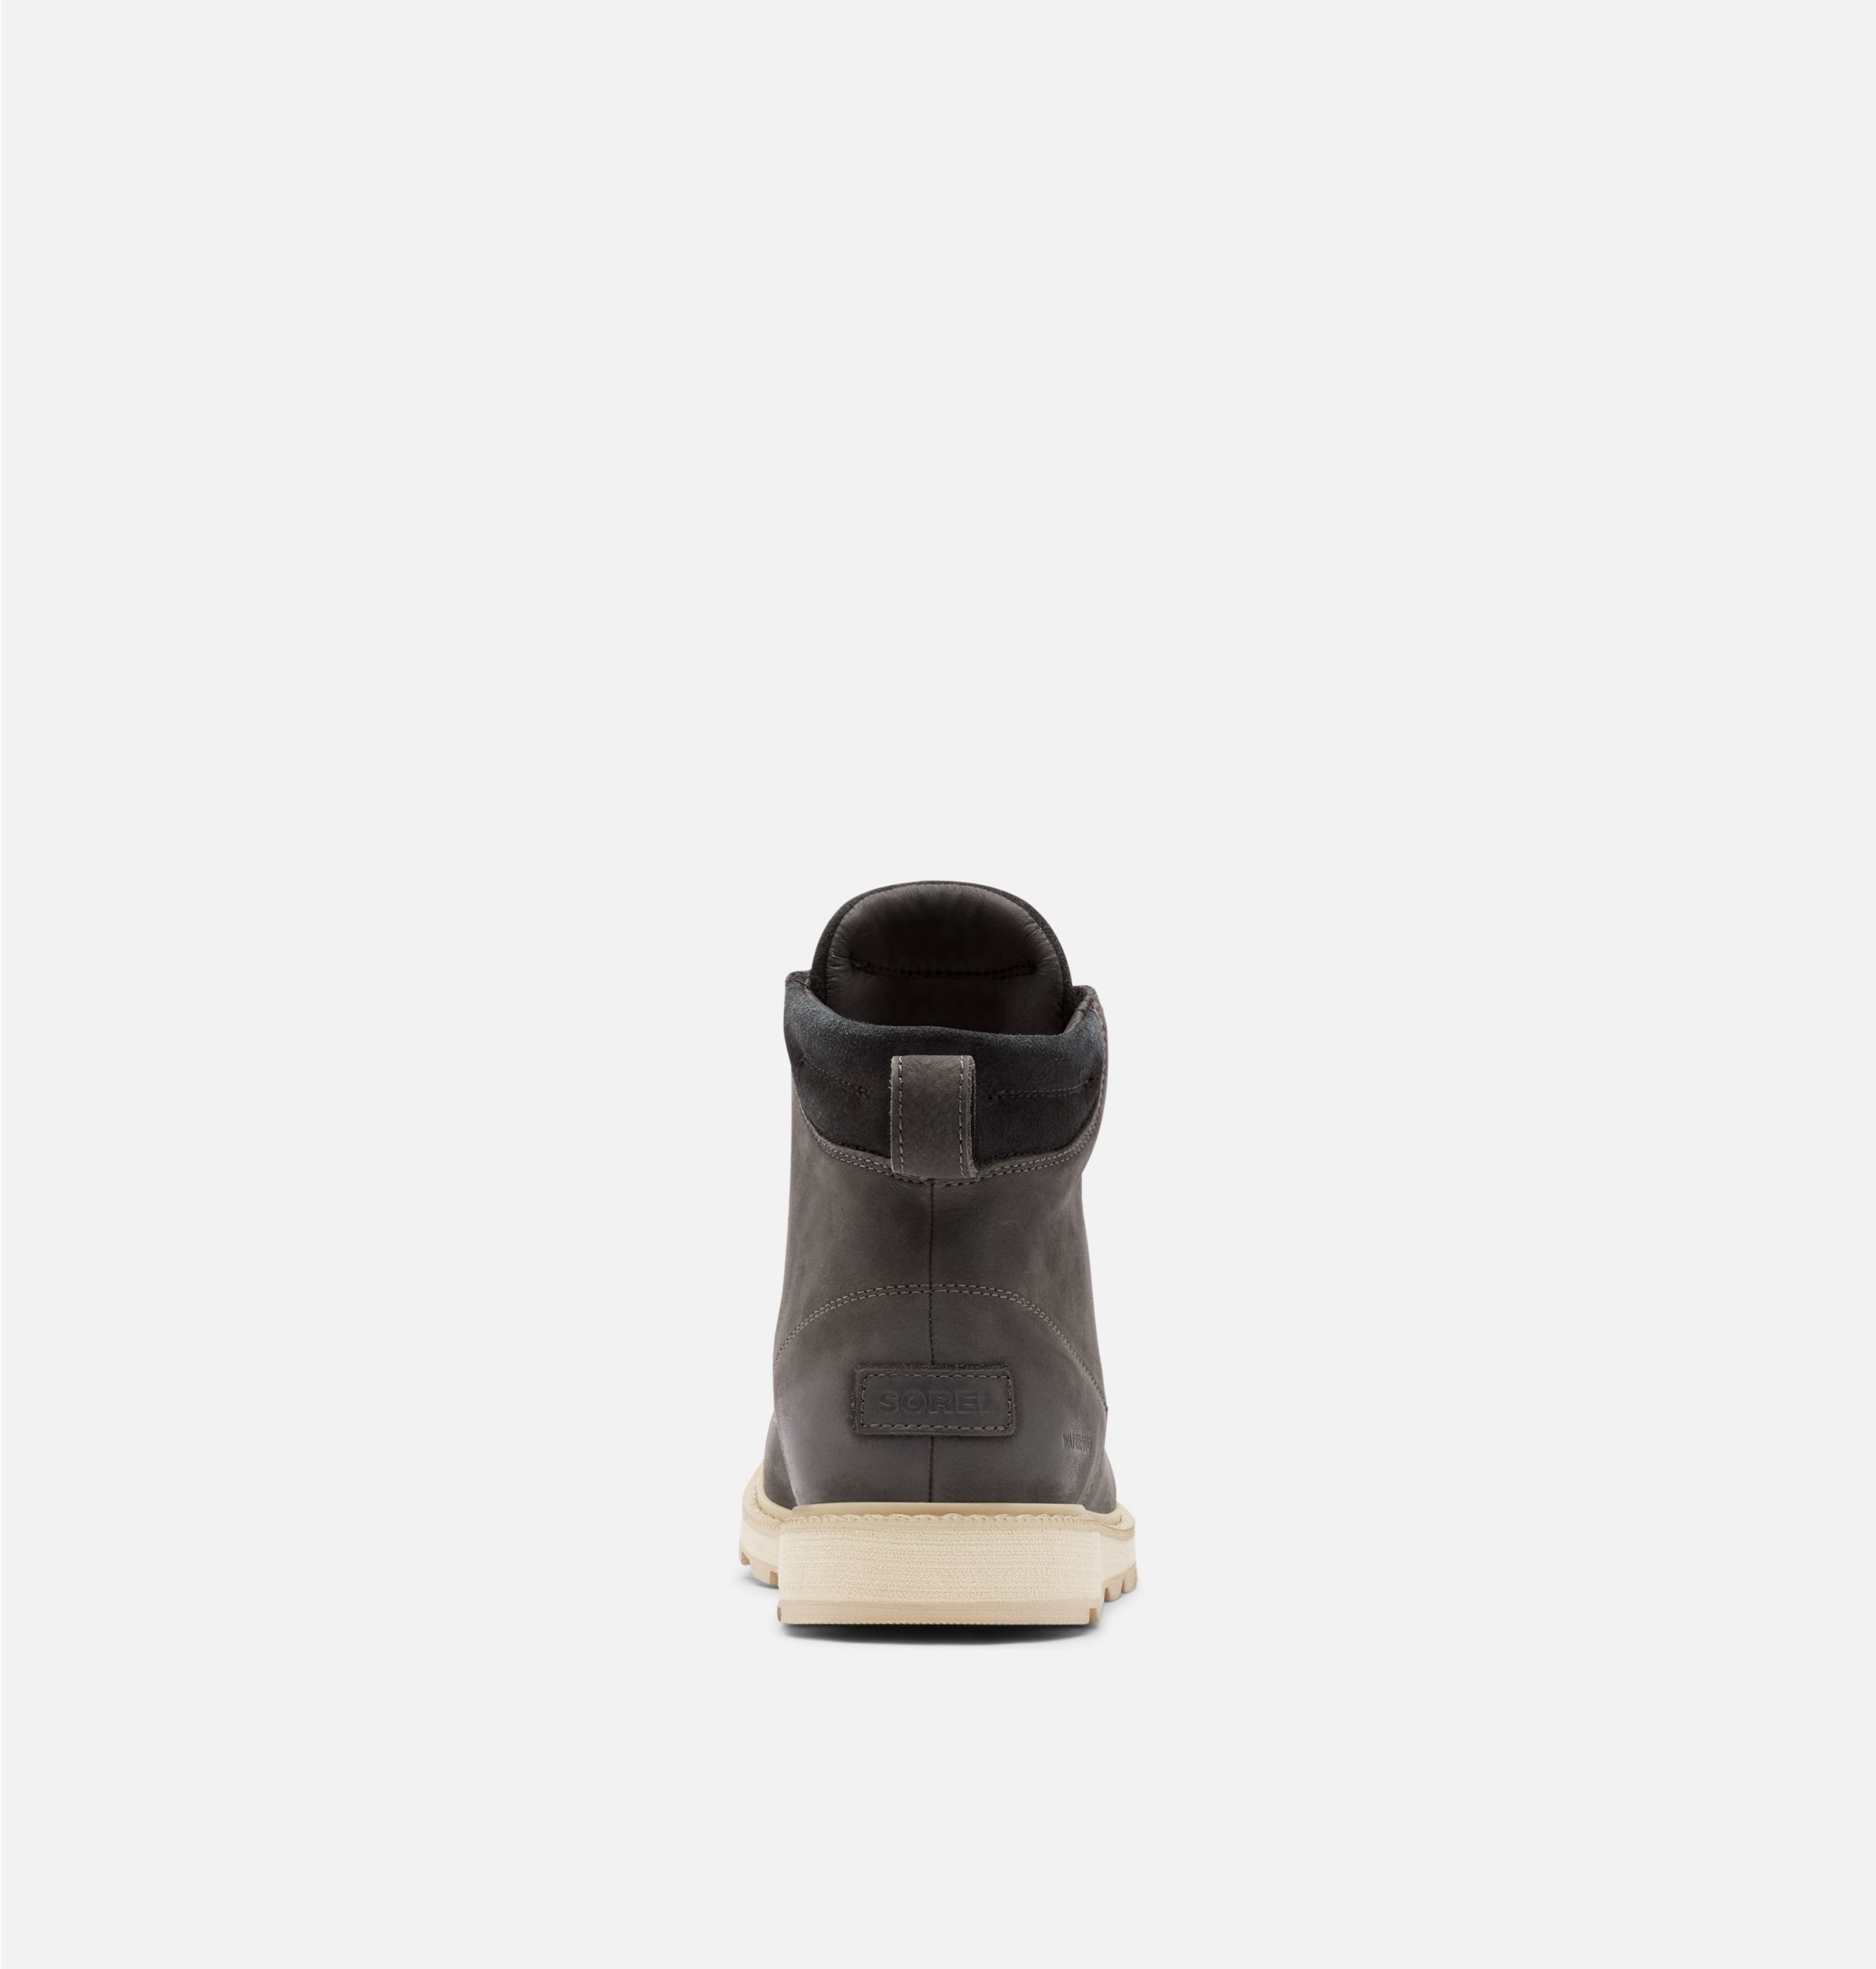 Sorel Men's Madson Moc-toe Waterproof Leather Hiker Boots In Grill/ Black, ModeSens